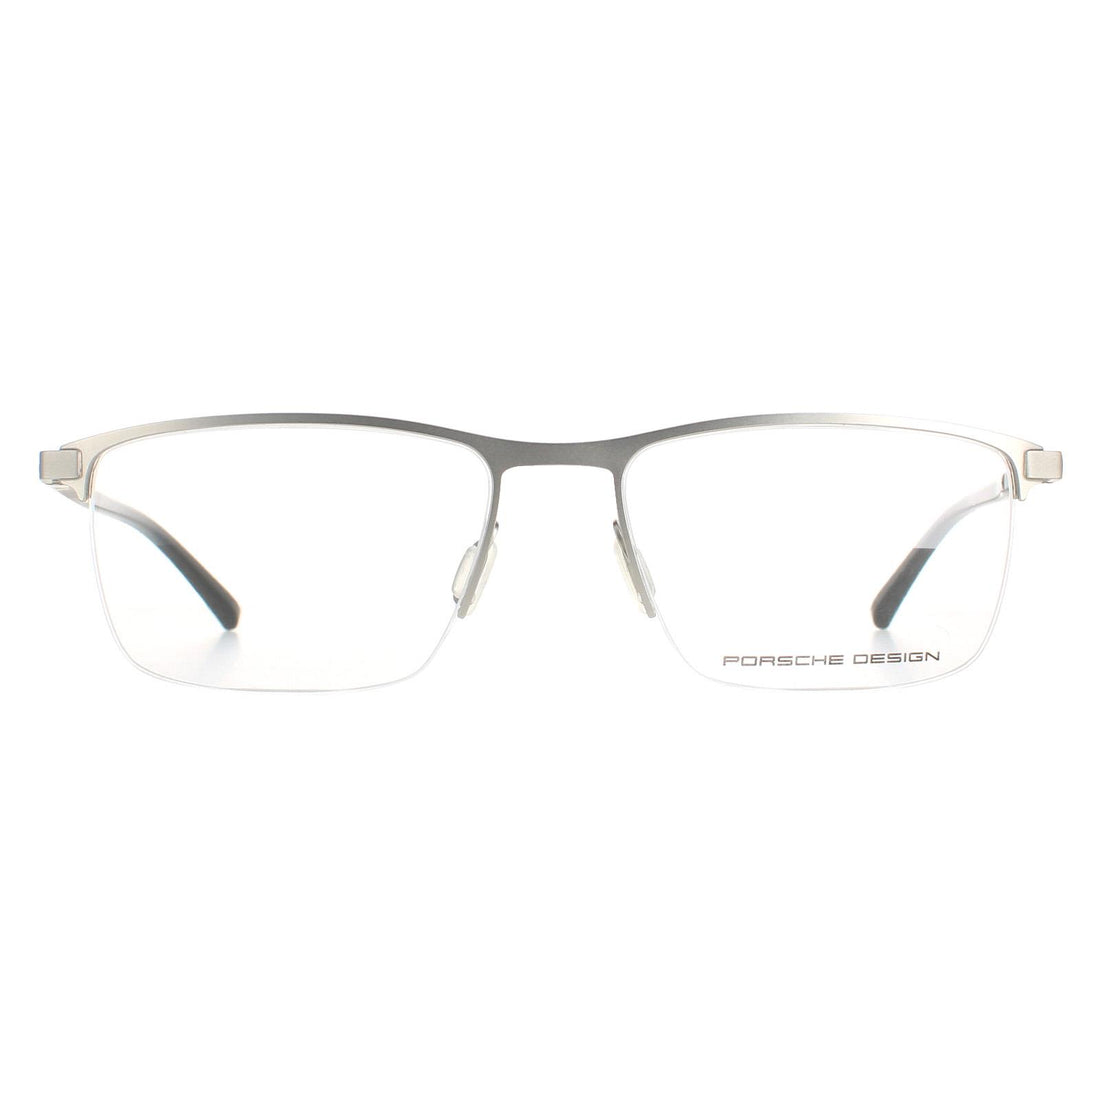 Porsche Design Glasses Frames P8371 B Palladium Women